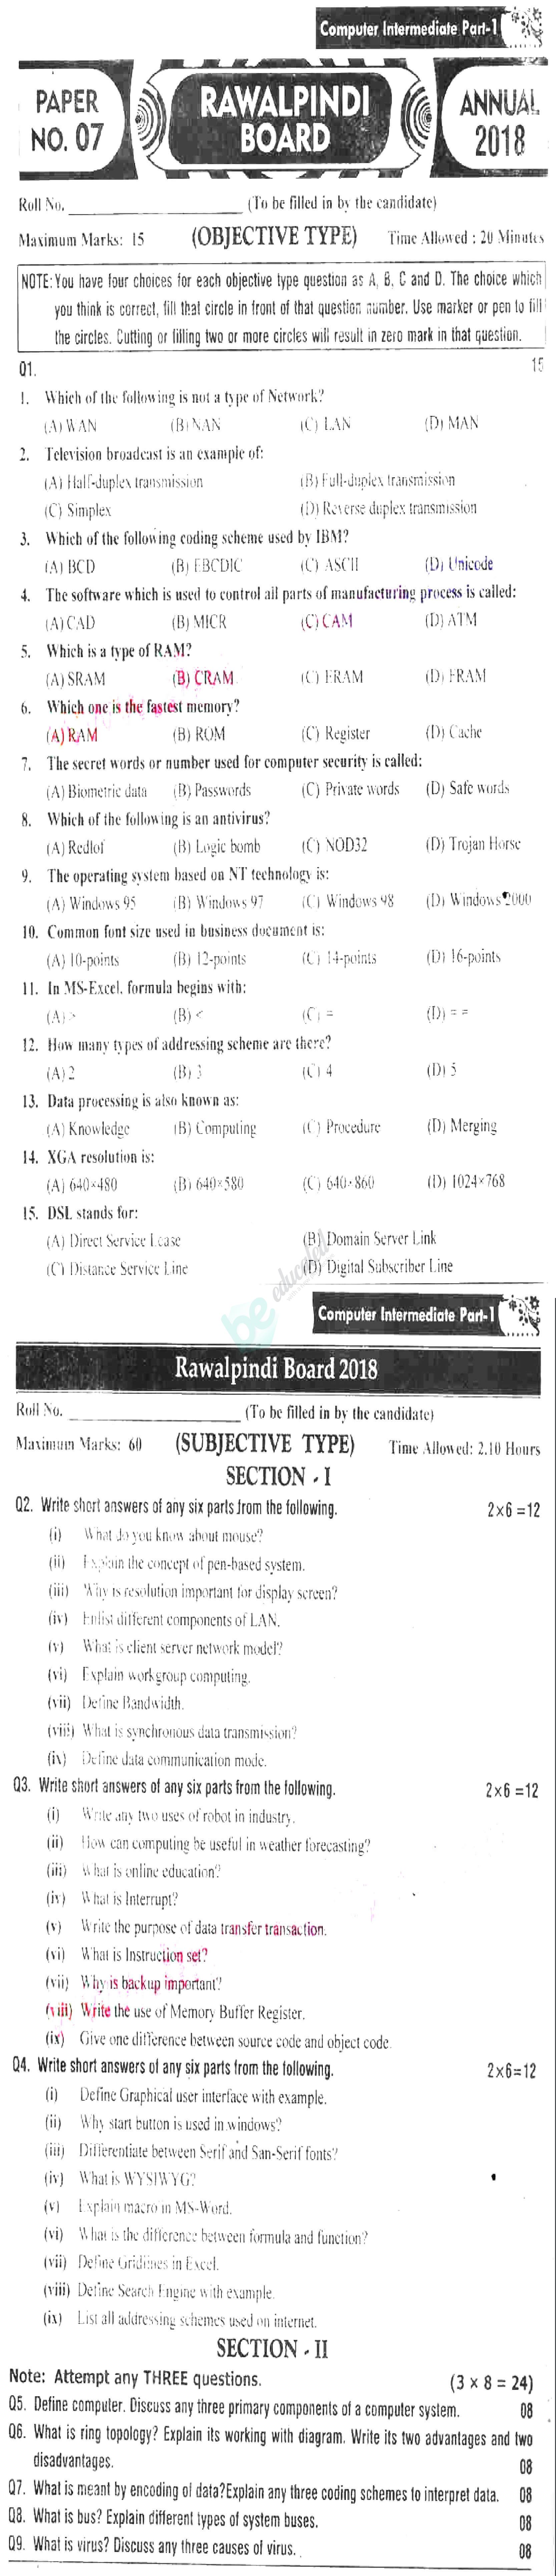 Computer Science ICS Part 1 Past Paper Group 1 BISE Rawalpindi 2018